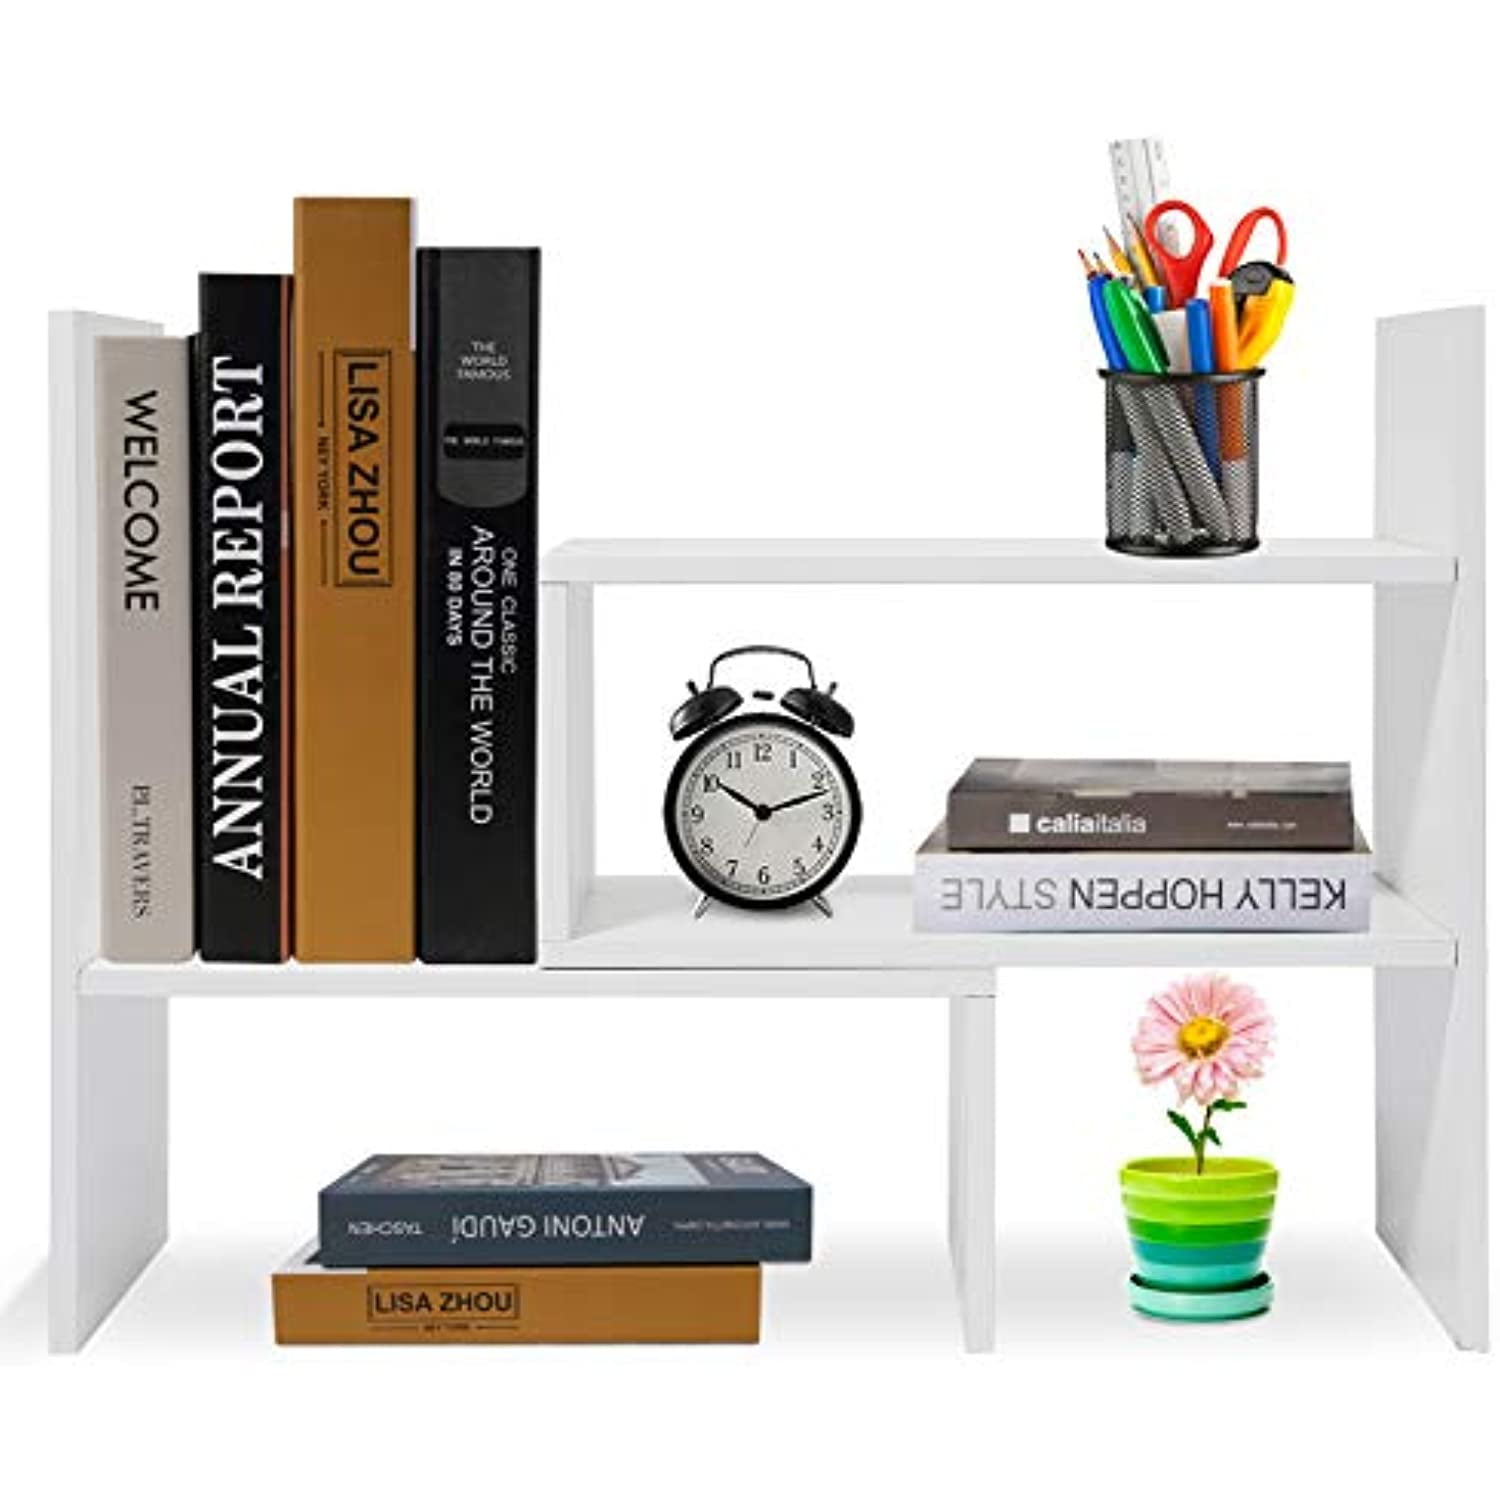 White PAG Wood Desktop Bookshelf Assembled Countertop Bookcase Literature Holder Accessories Display Rack Office Supplies Desk Organizer 